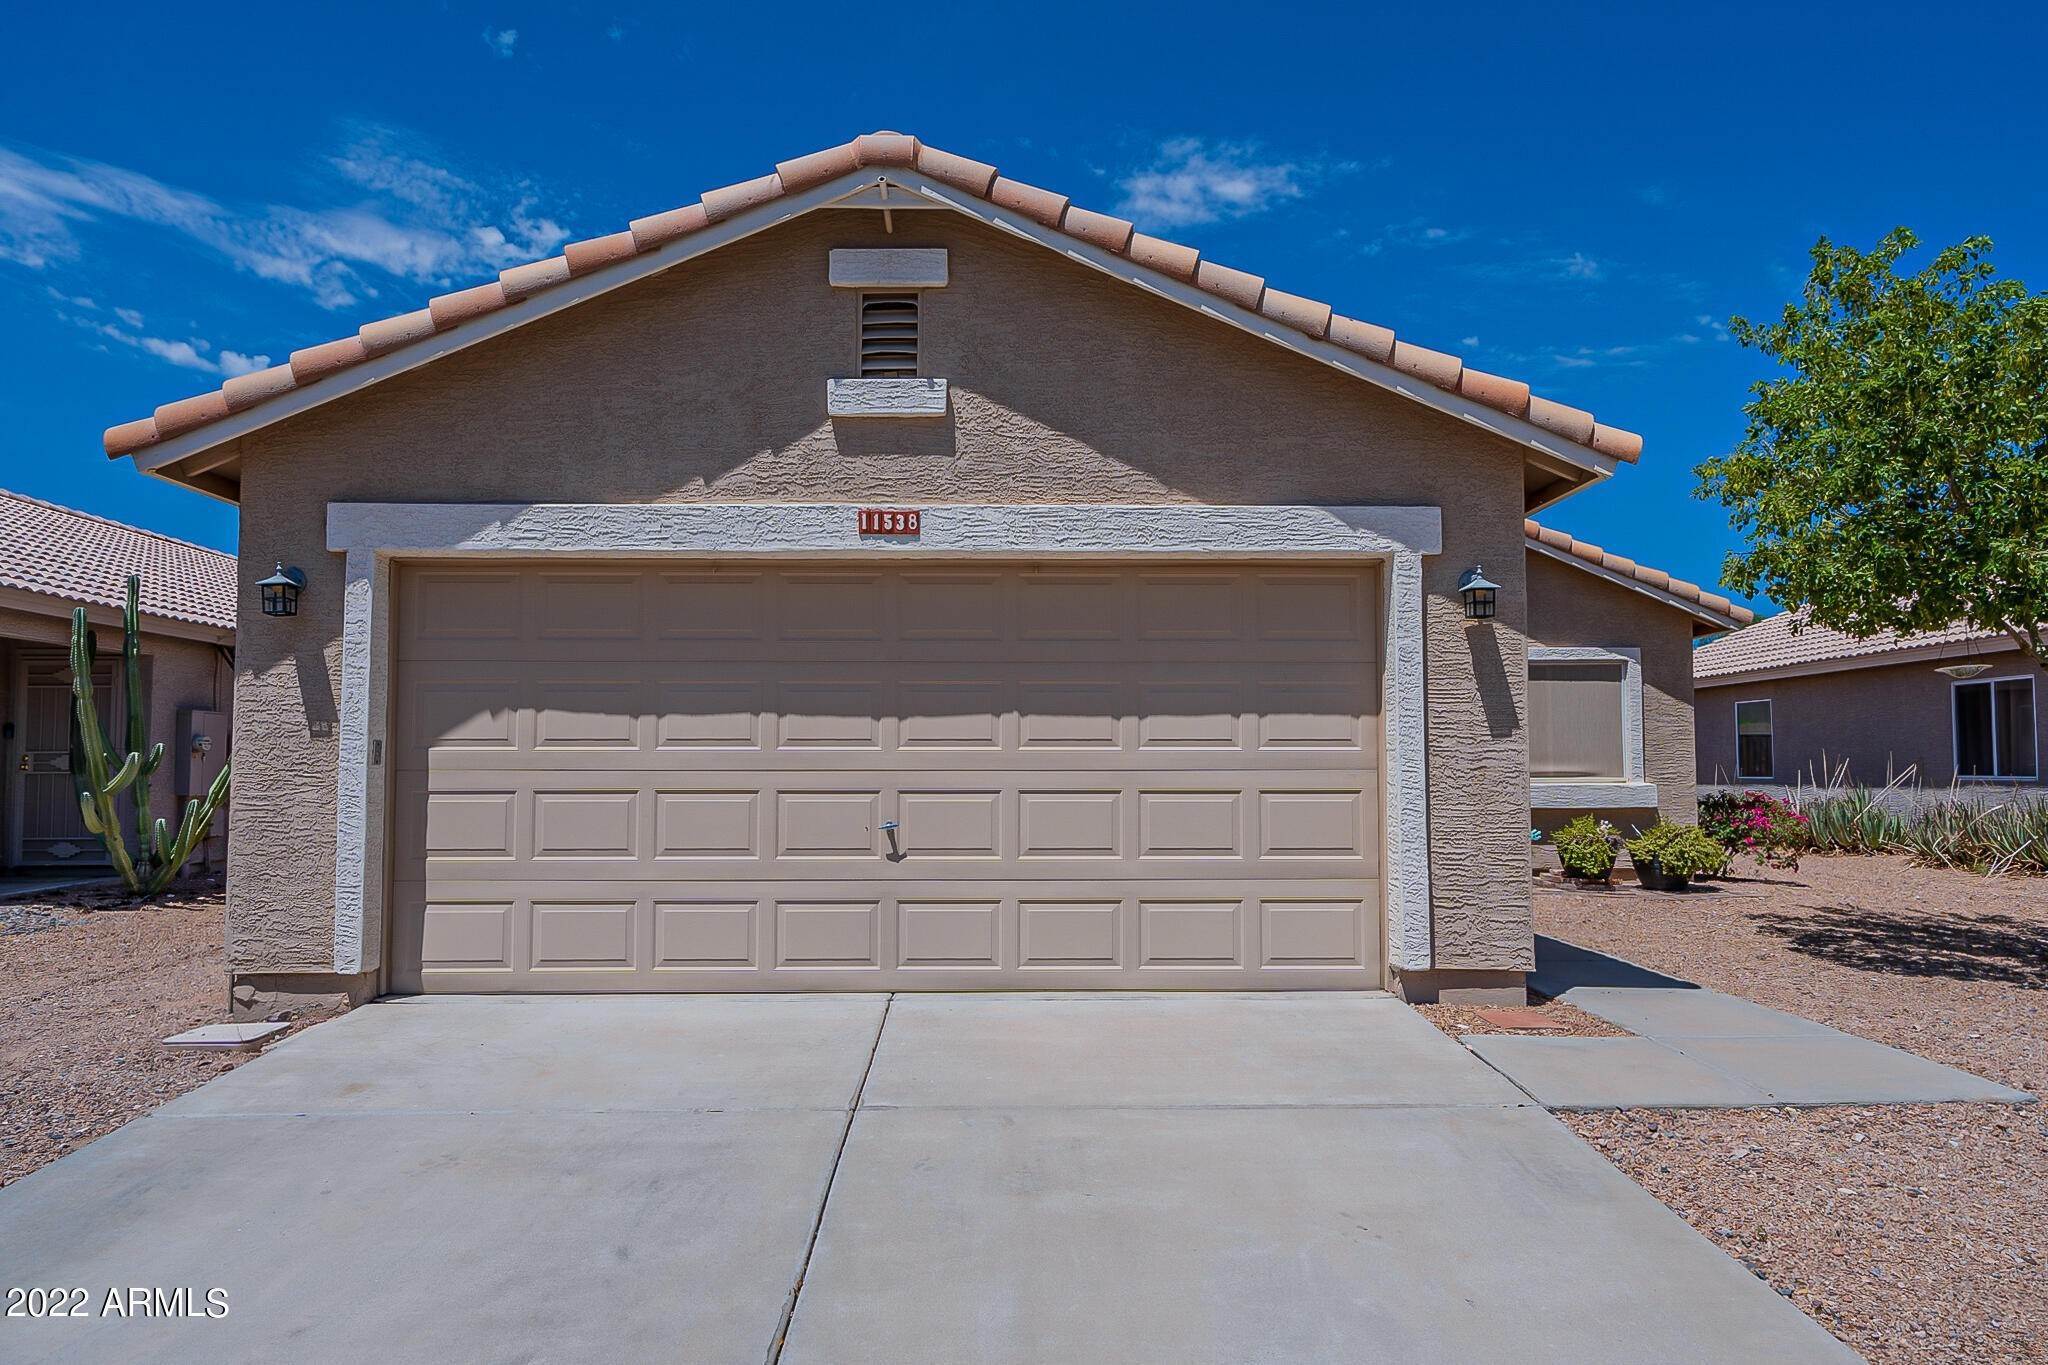 2. Single Family for Sale at Mesa, AZ 85207